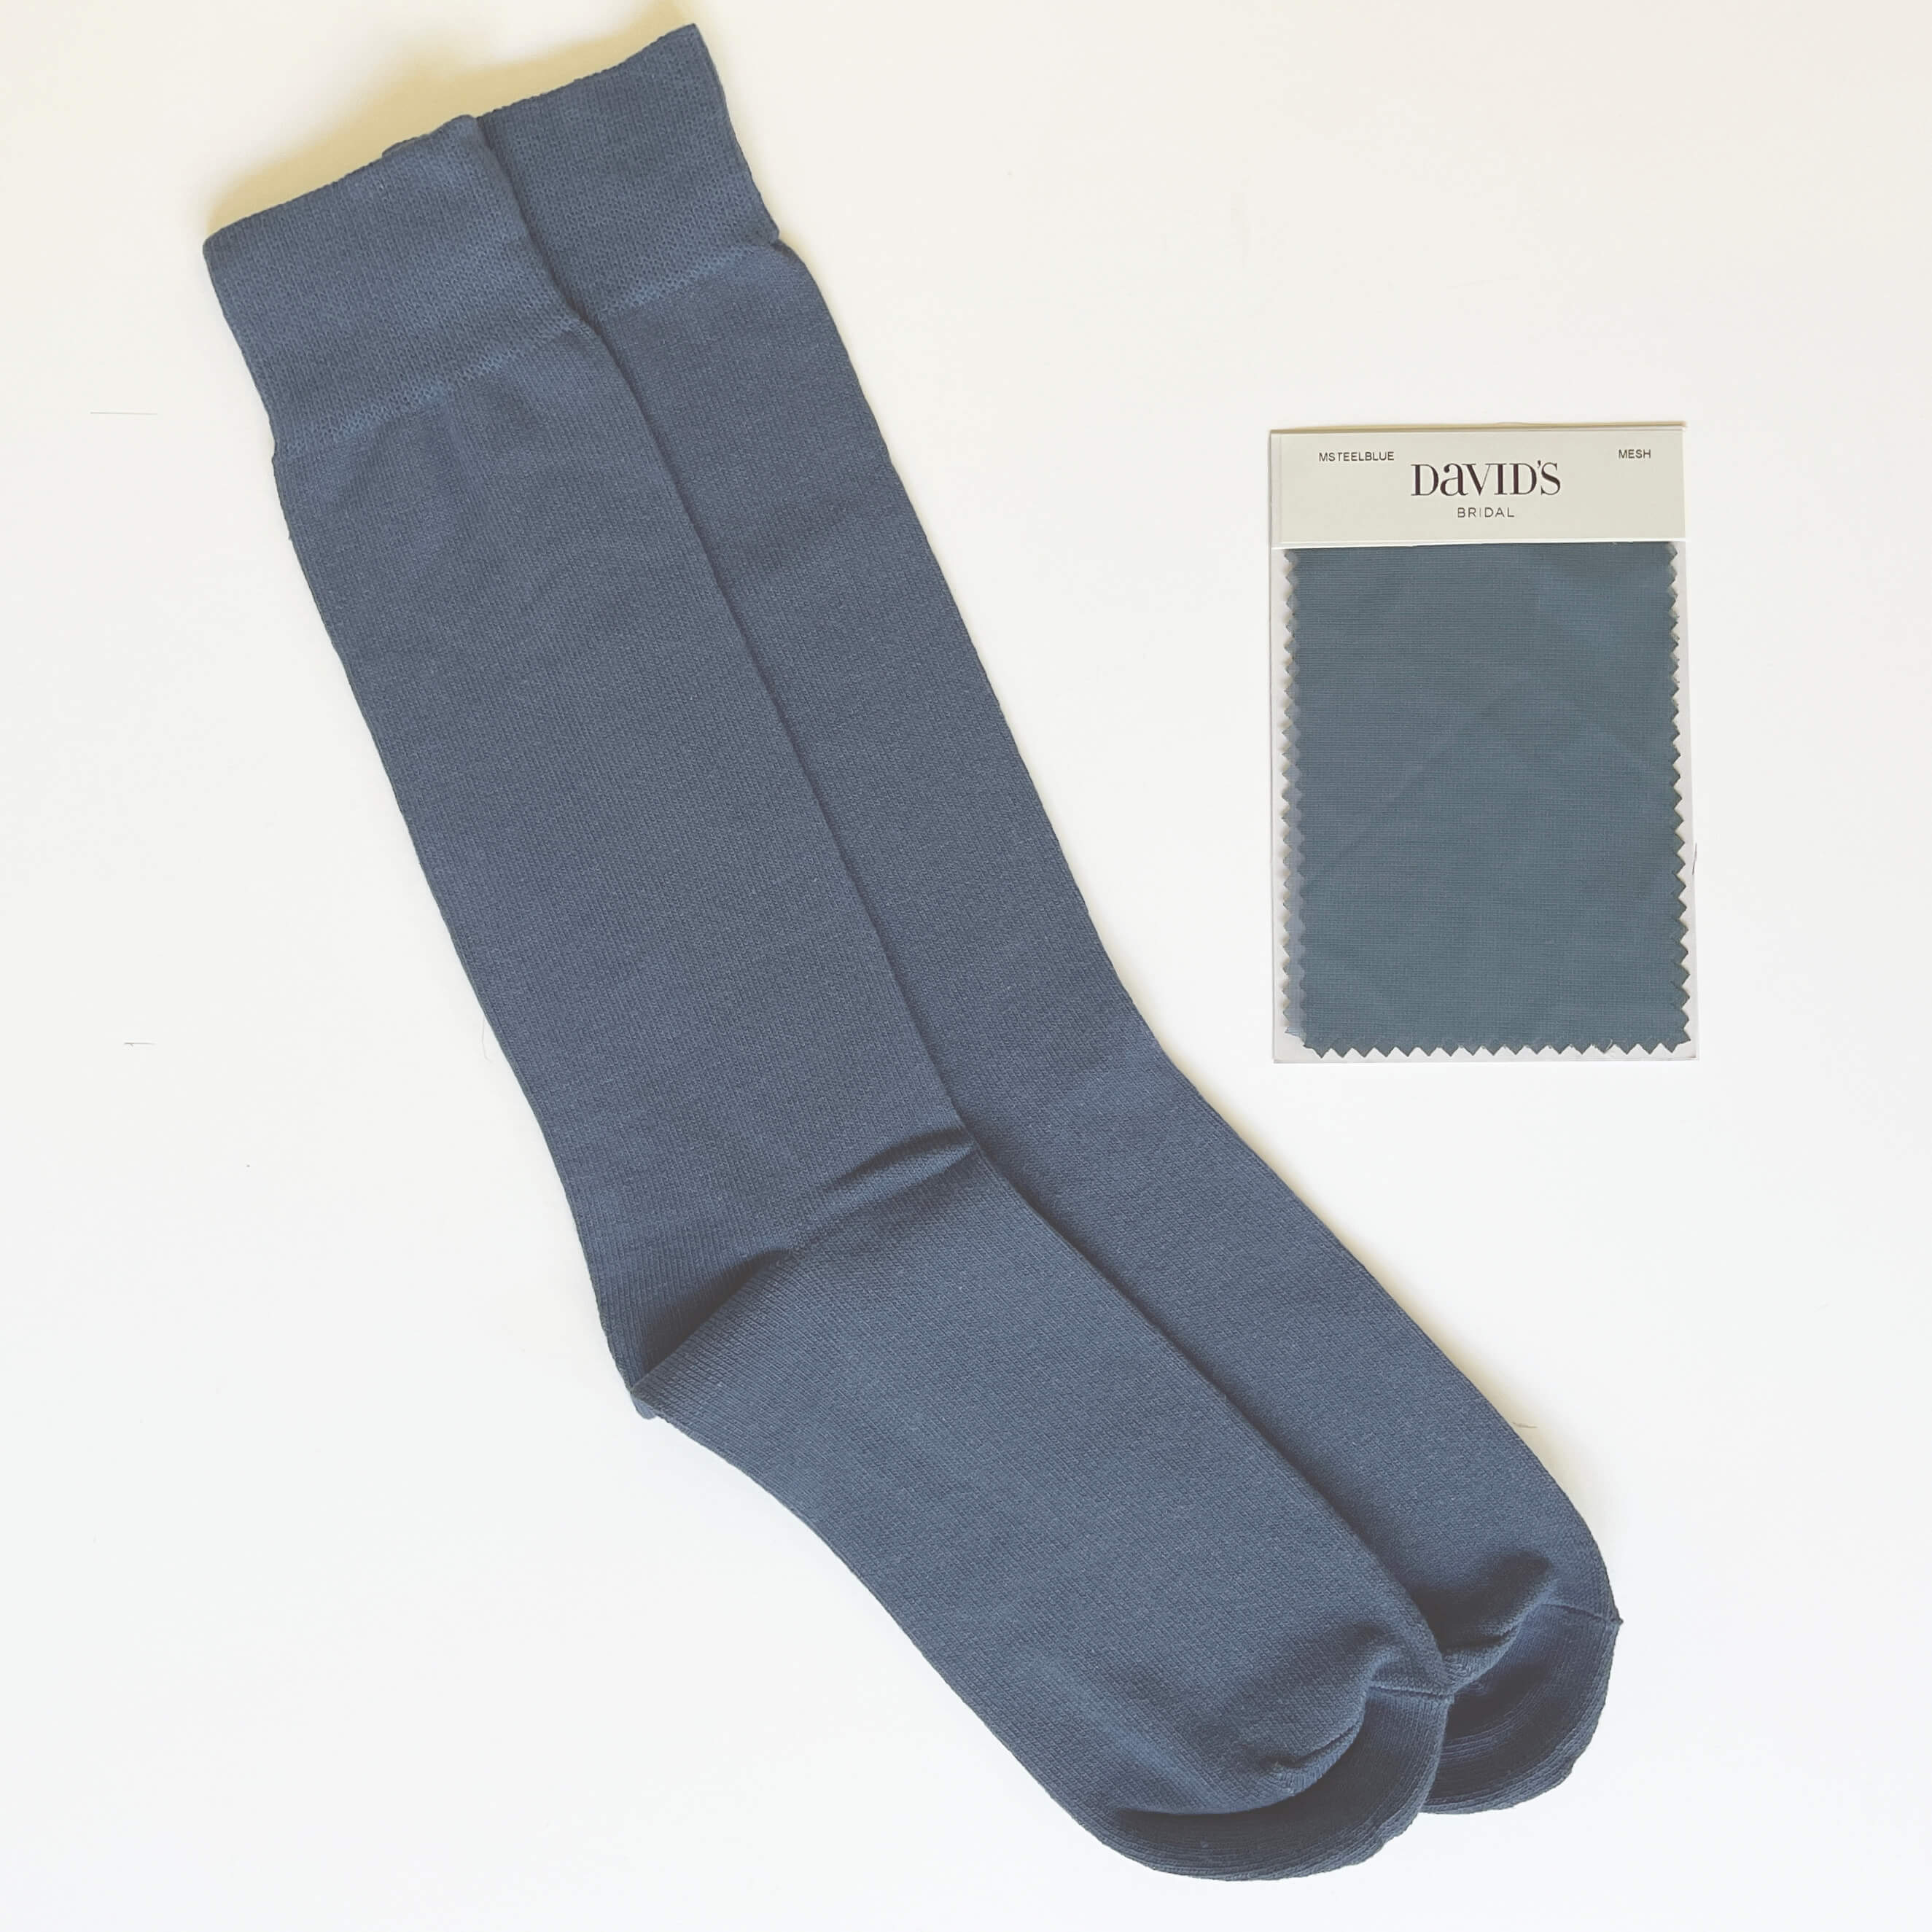 Similar to M STEEL BLUE (David's Bridal) Men's/Groomsmen Socks